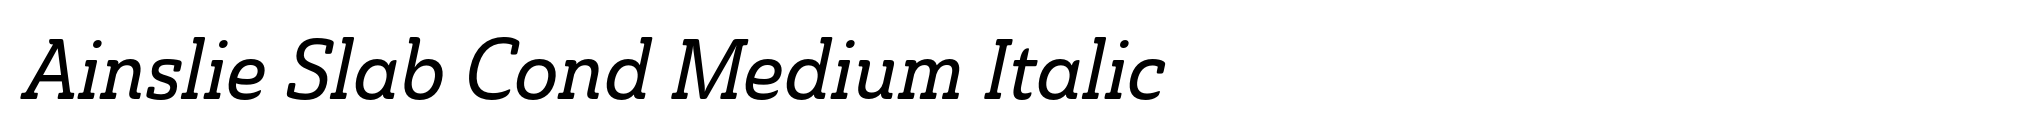 Ainslie Slab Cond Medium Italic image